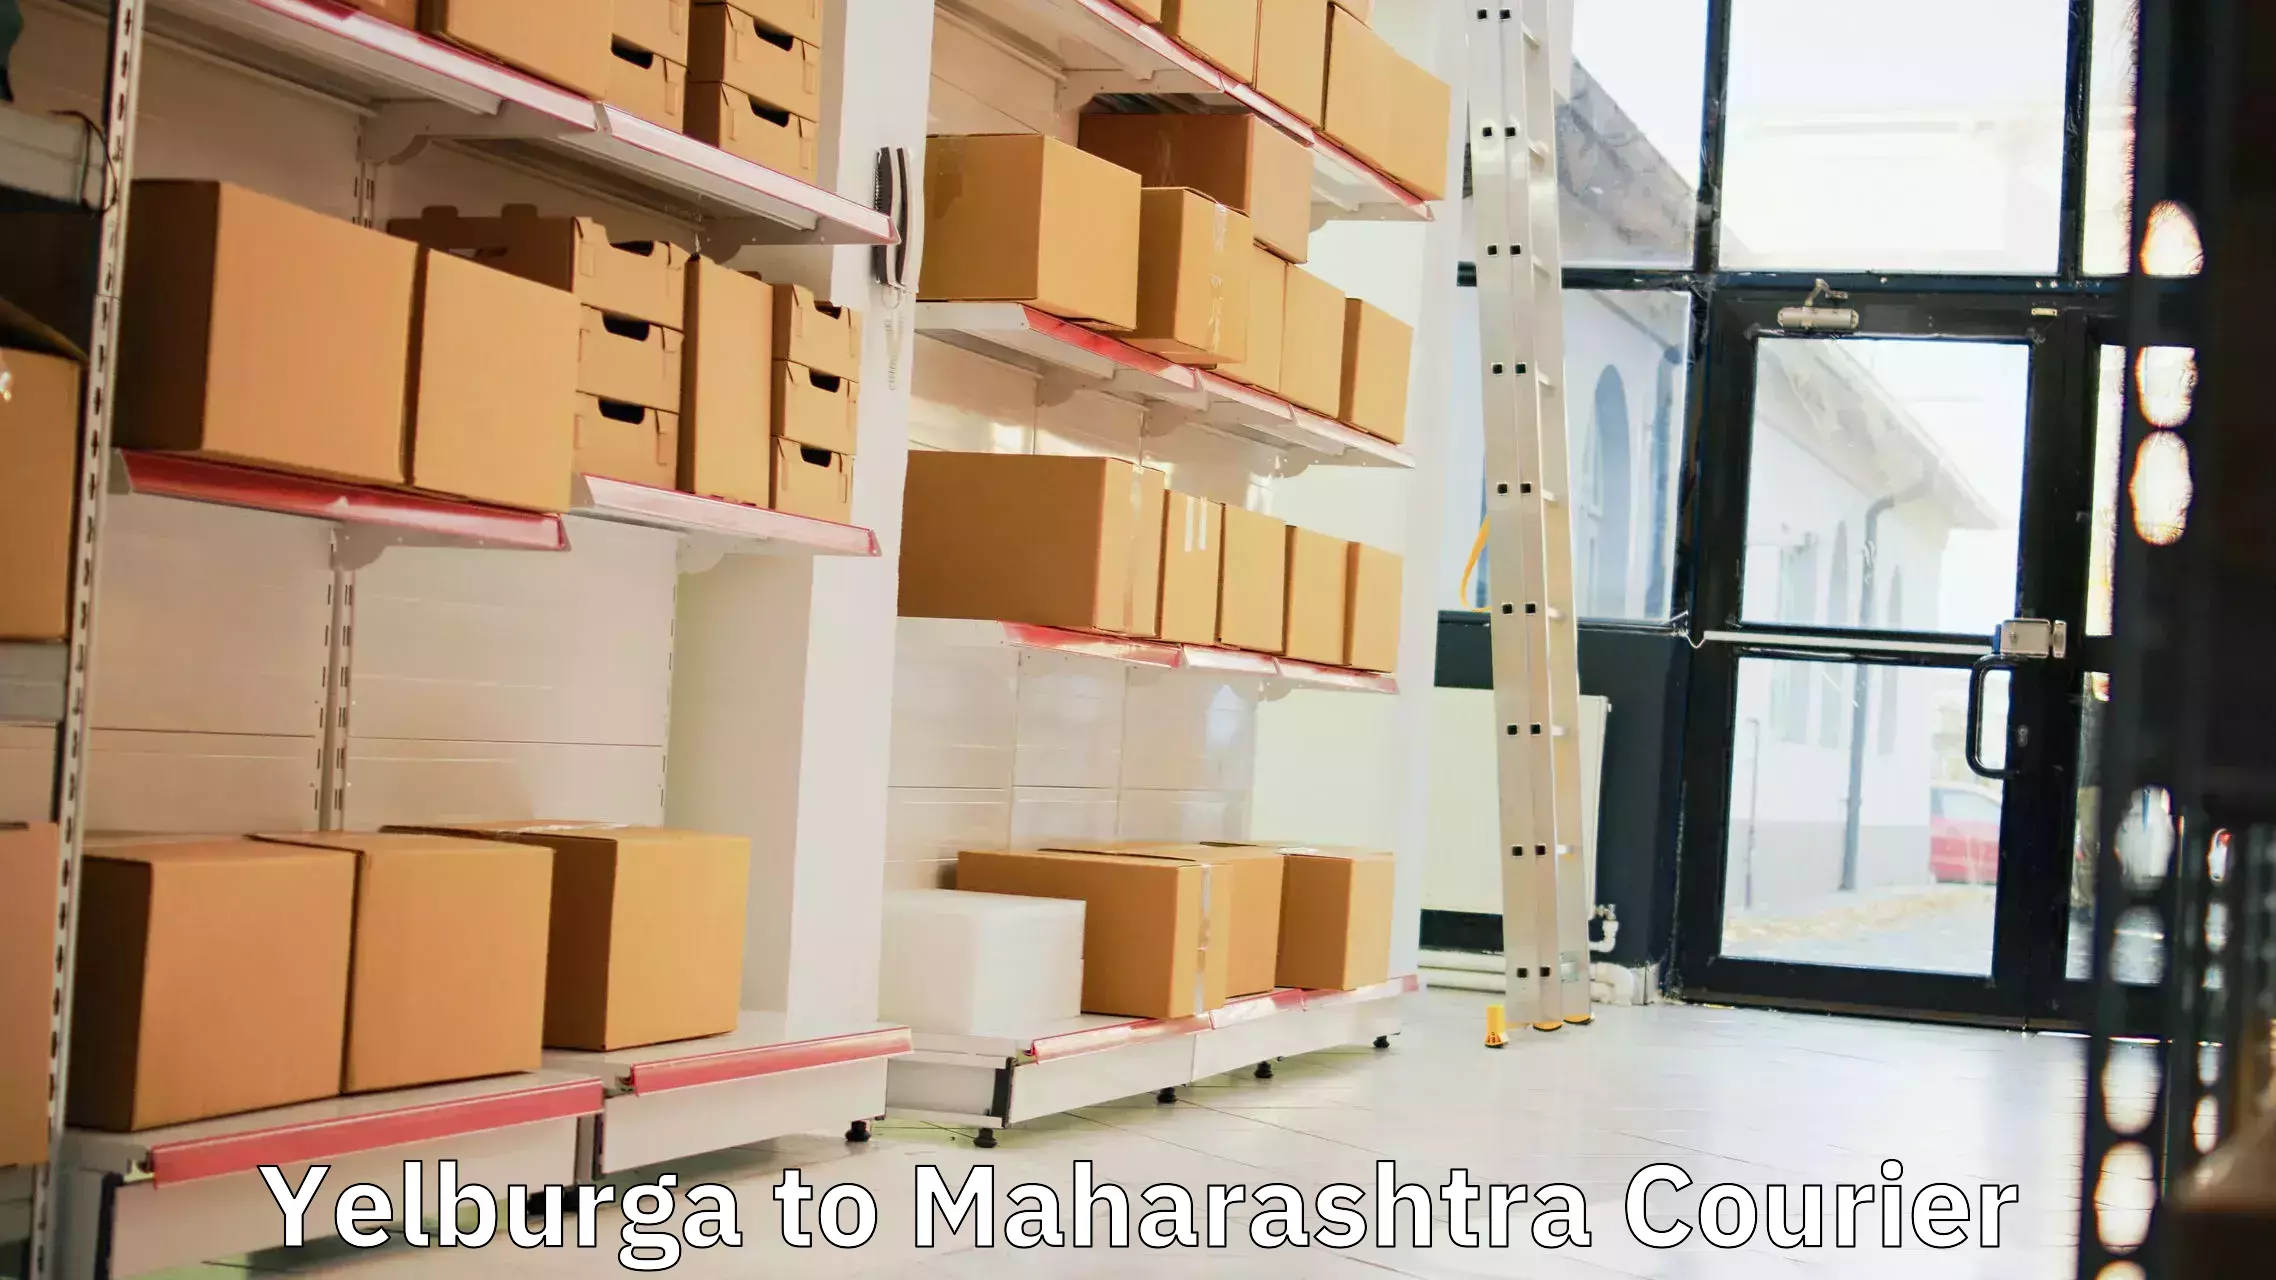 Courier service booking Yelburga to Mumbai Port